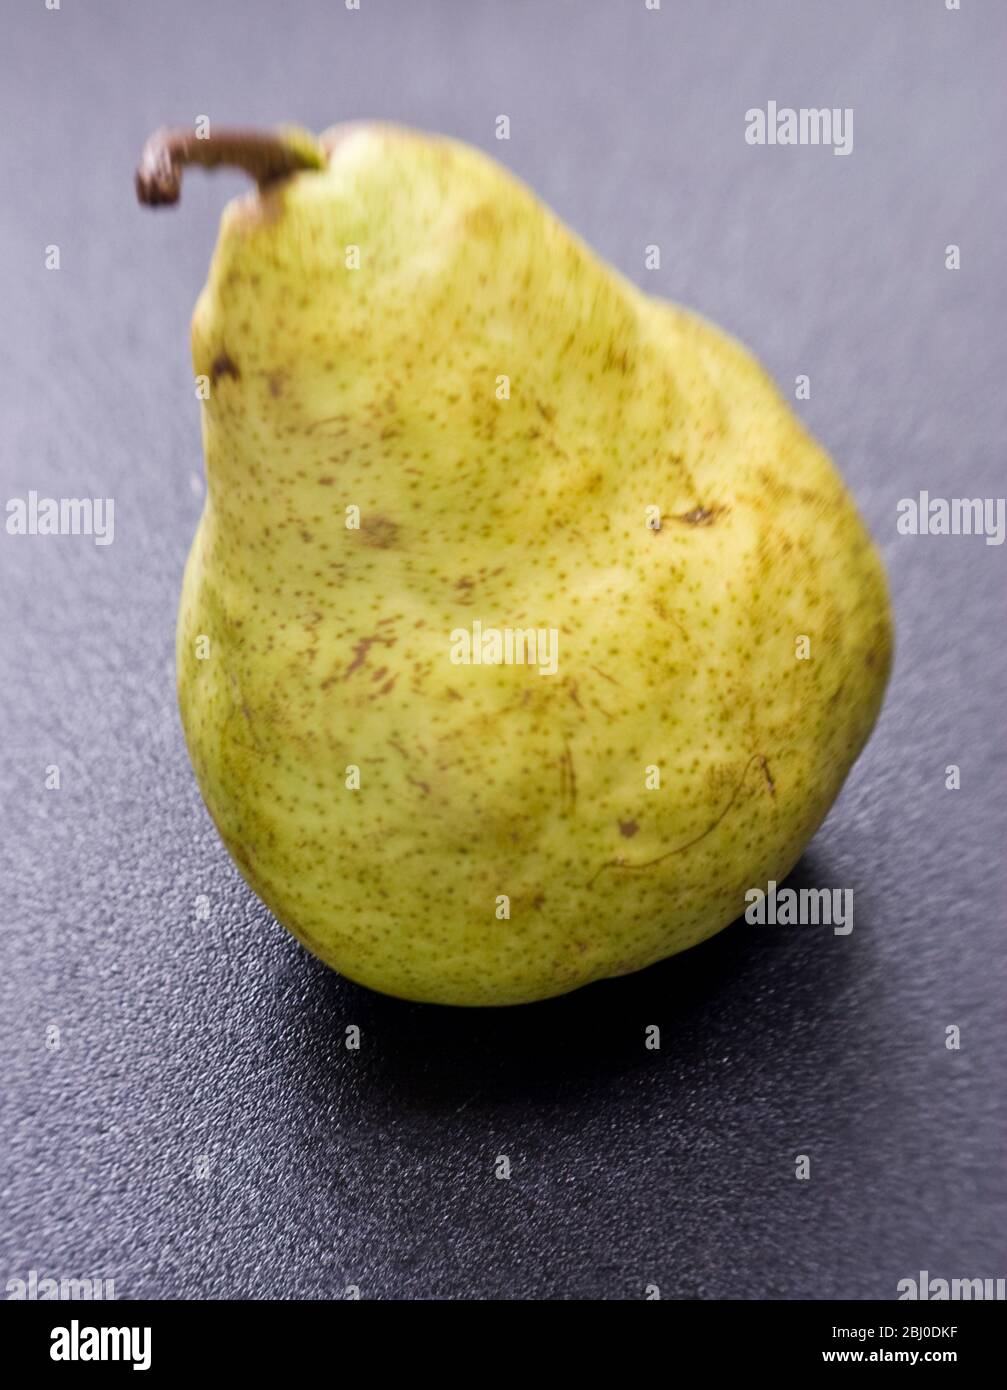 Single yellow green pear on dark surface. - Stock Photo